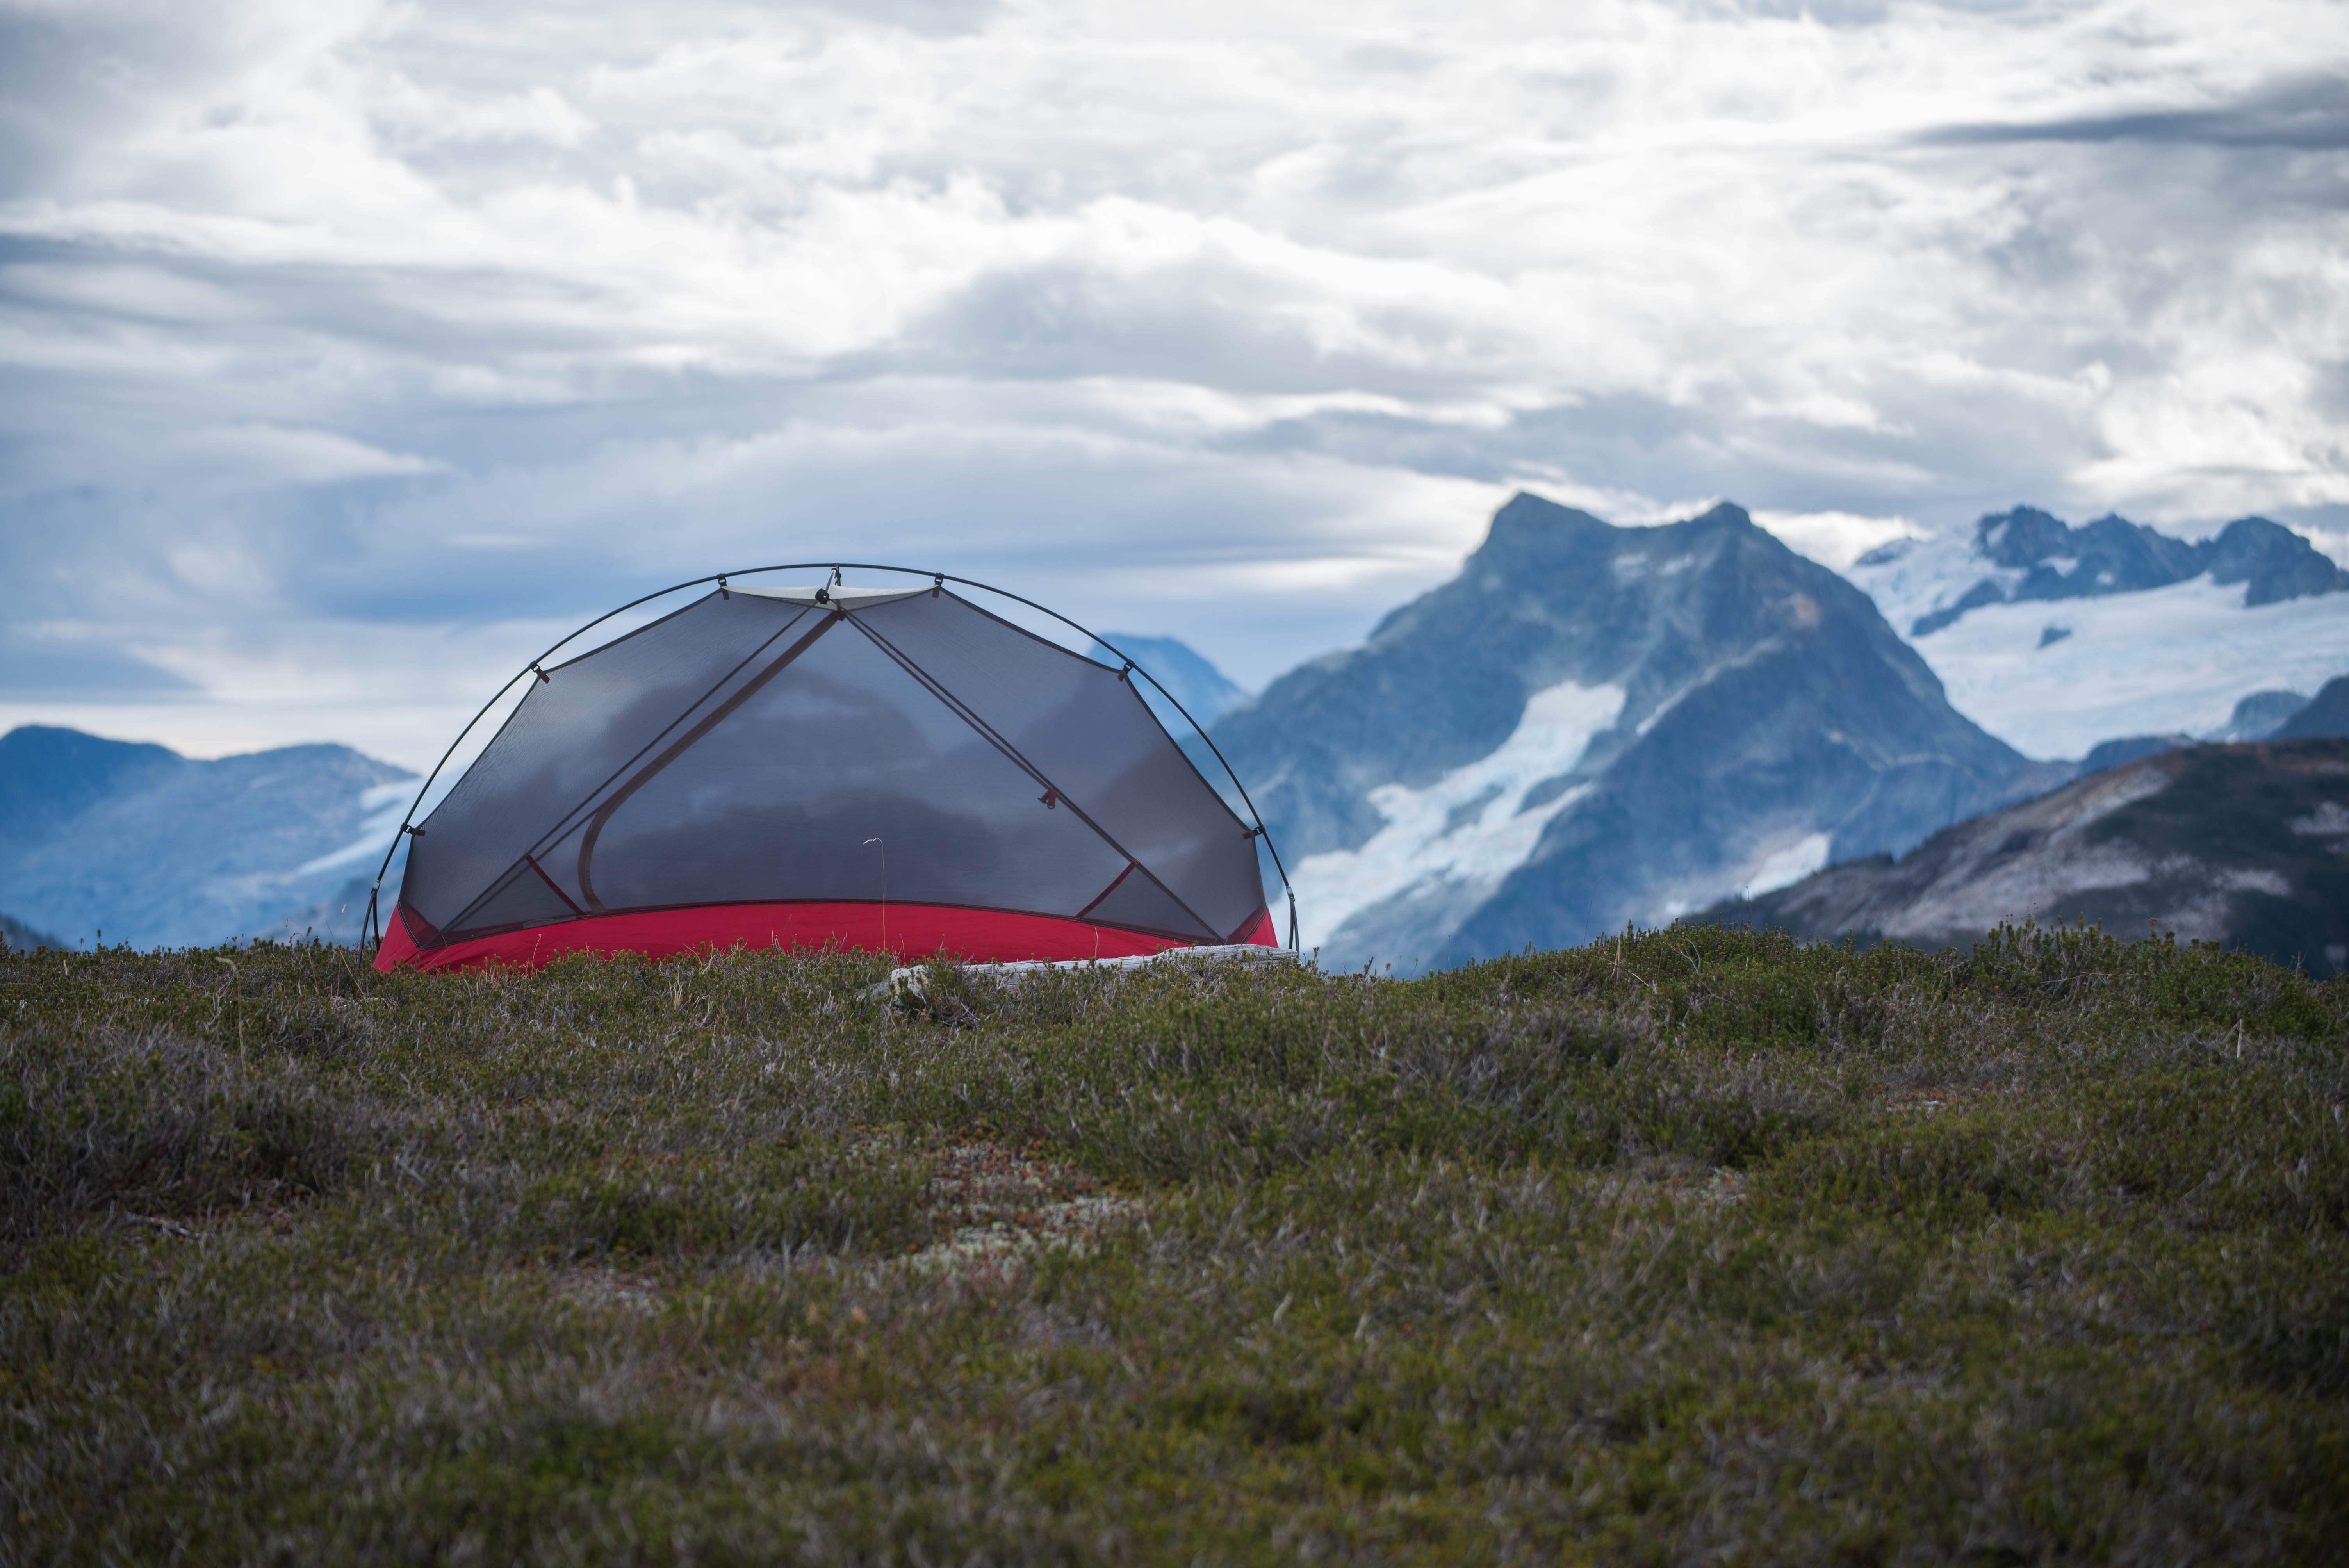 Top camping. Палатка. Палатка в горах. Палатка на природе. Туристическая палатка на природе.